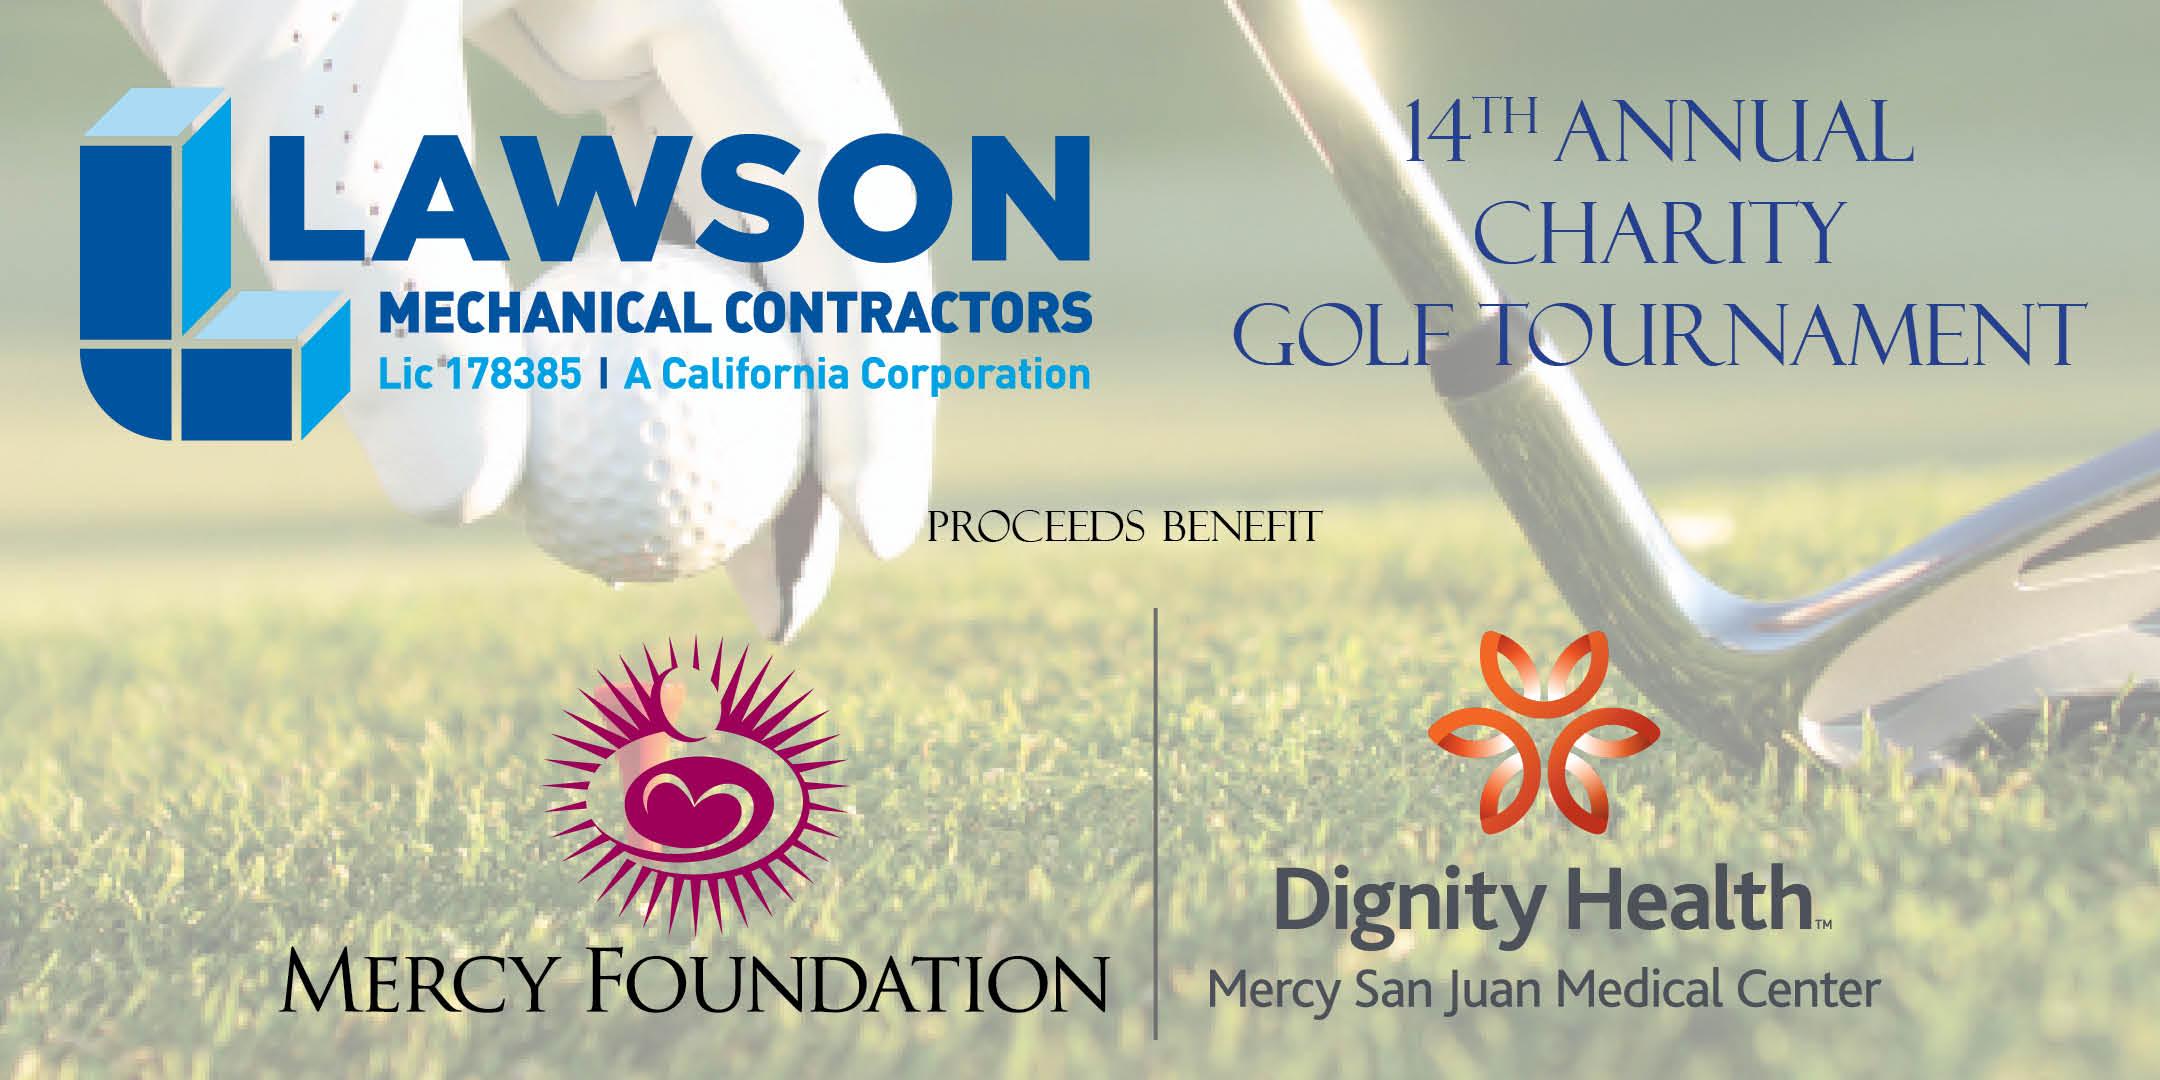 Lawson's 14th Annual Charity Golf Tournament